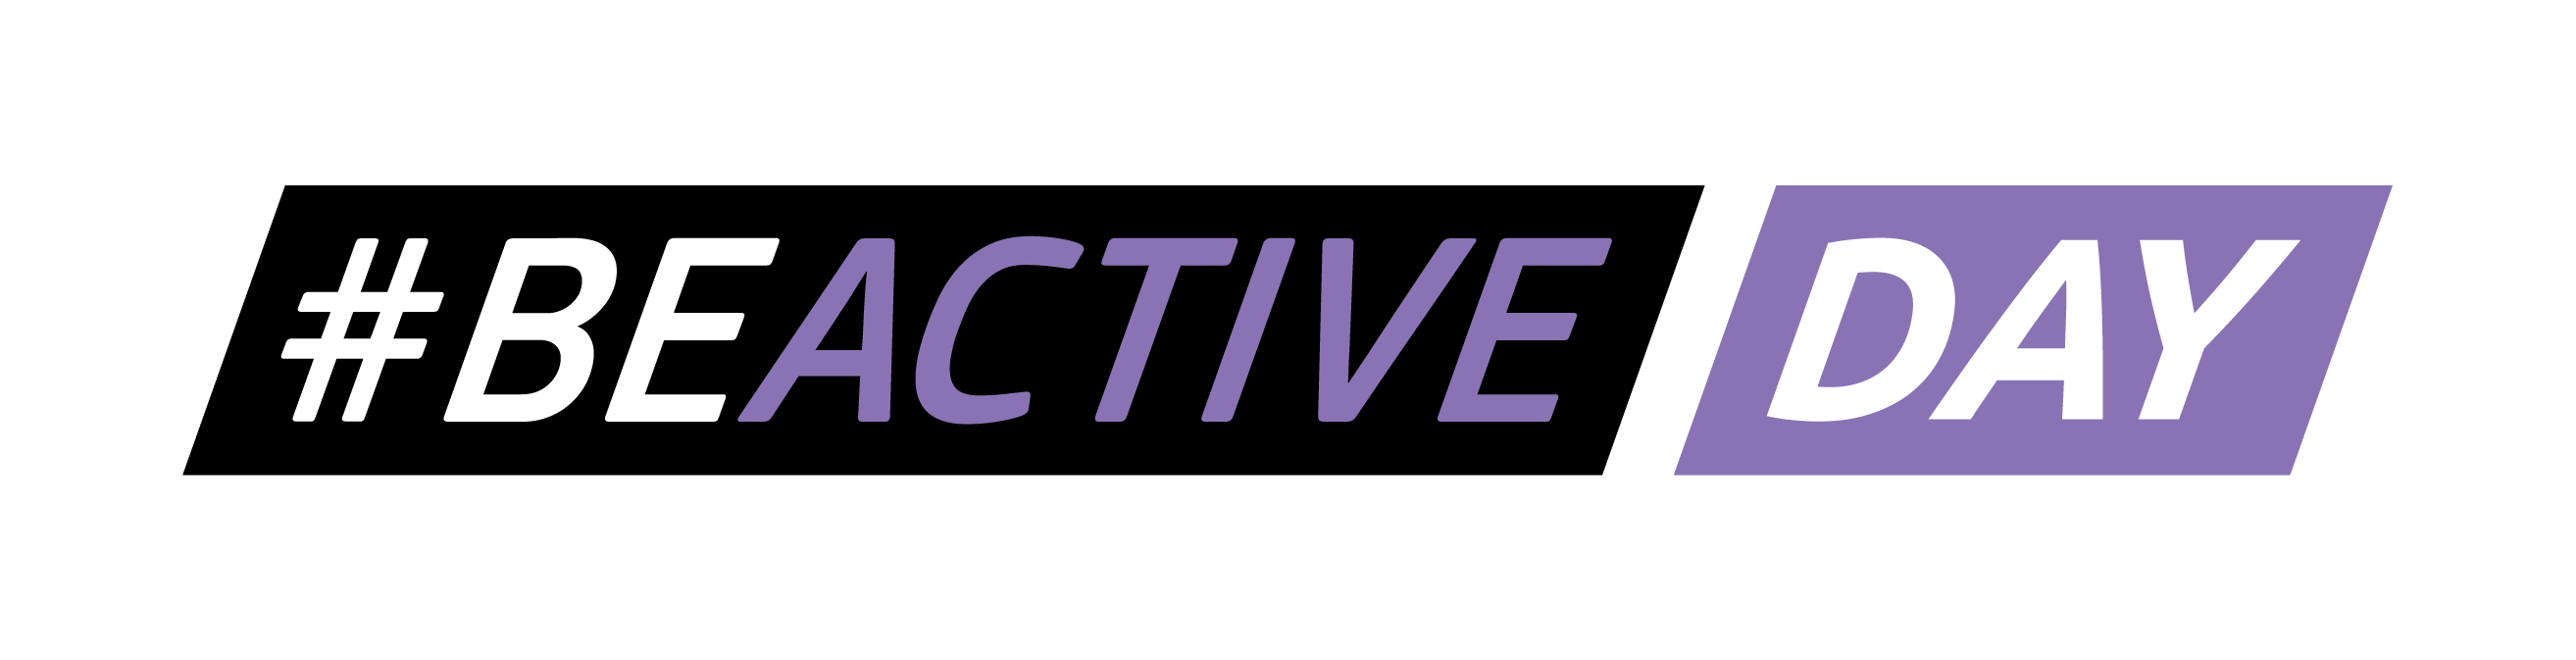 beactive-day-rgb-logo__2627x673.png